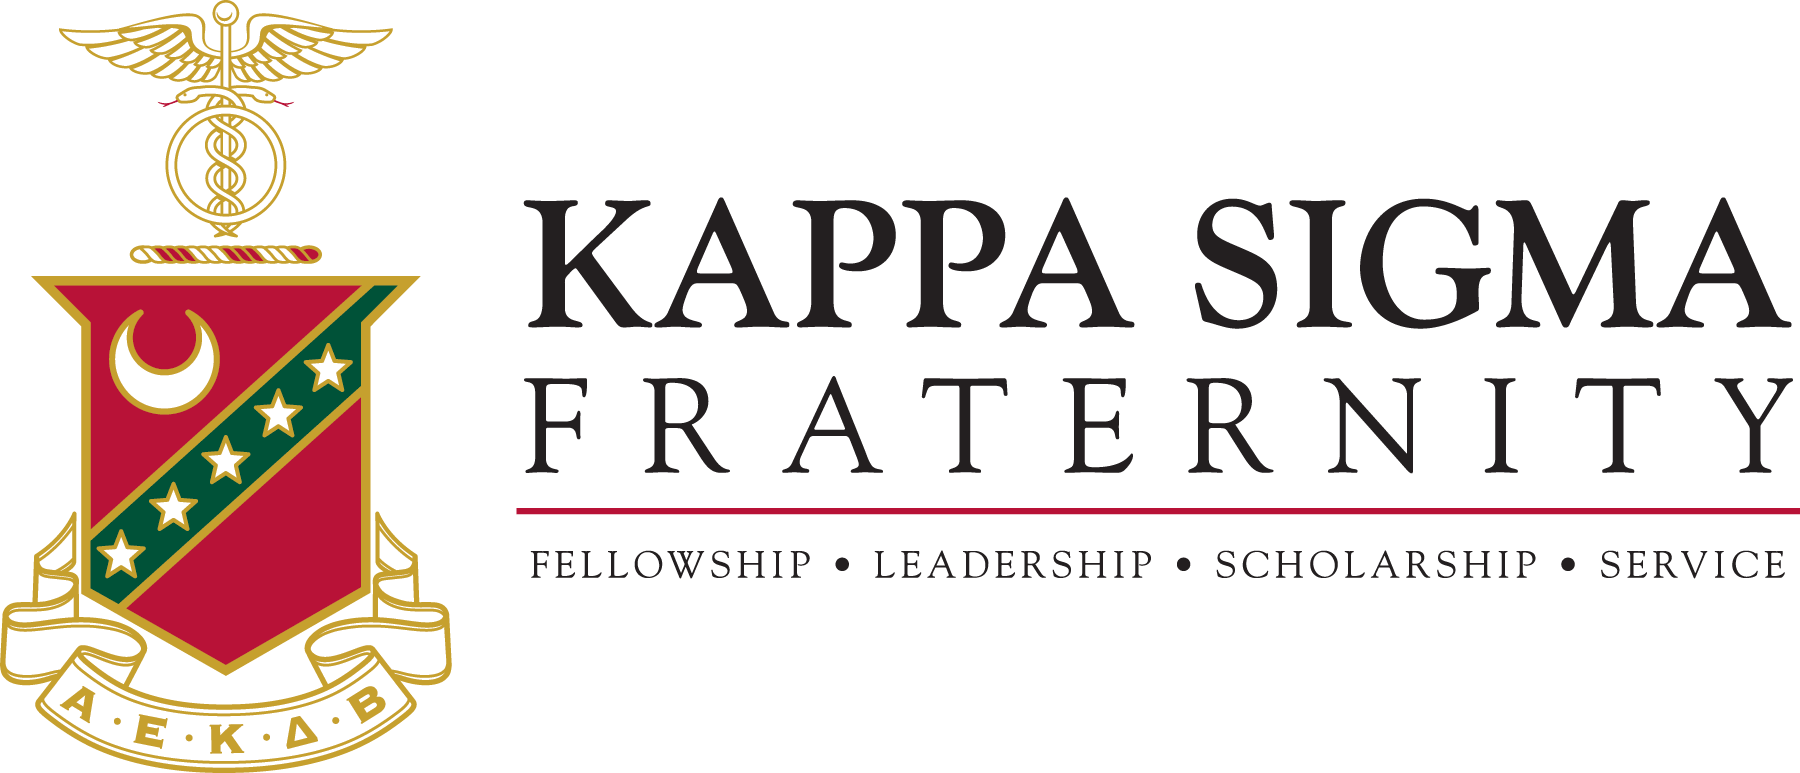 Sigma Logo - Logos and Icons - Kappa Sigma Fraternity